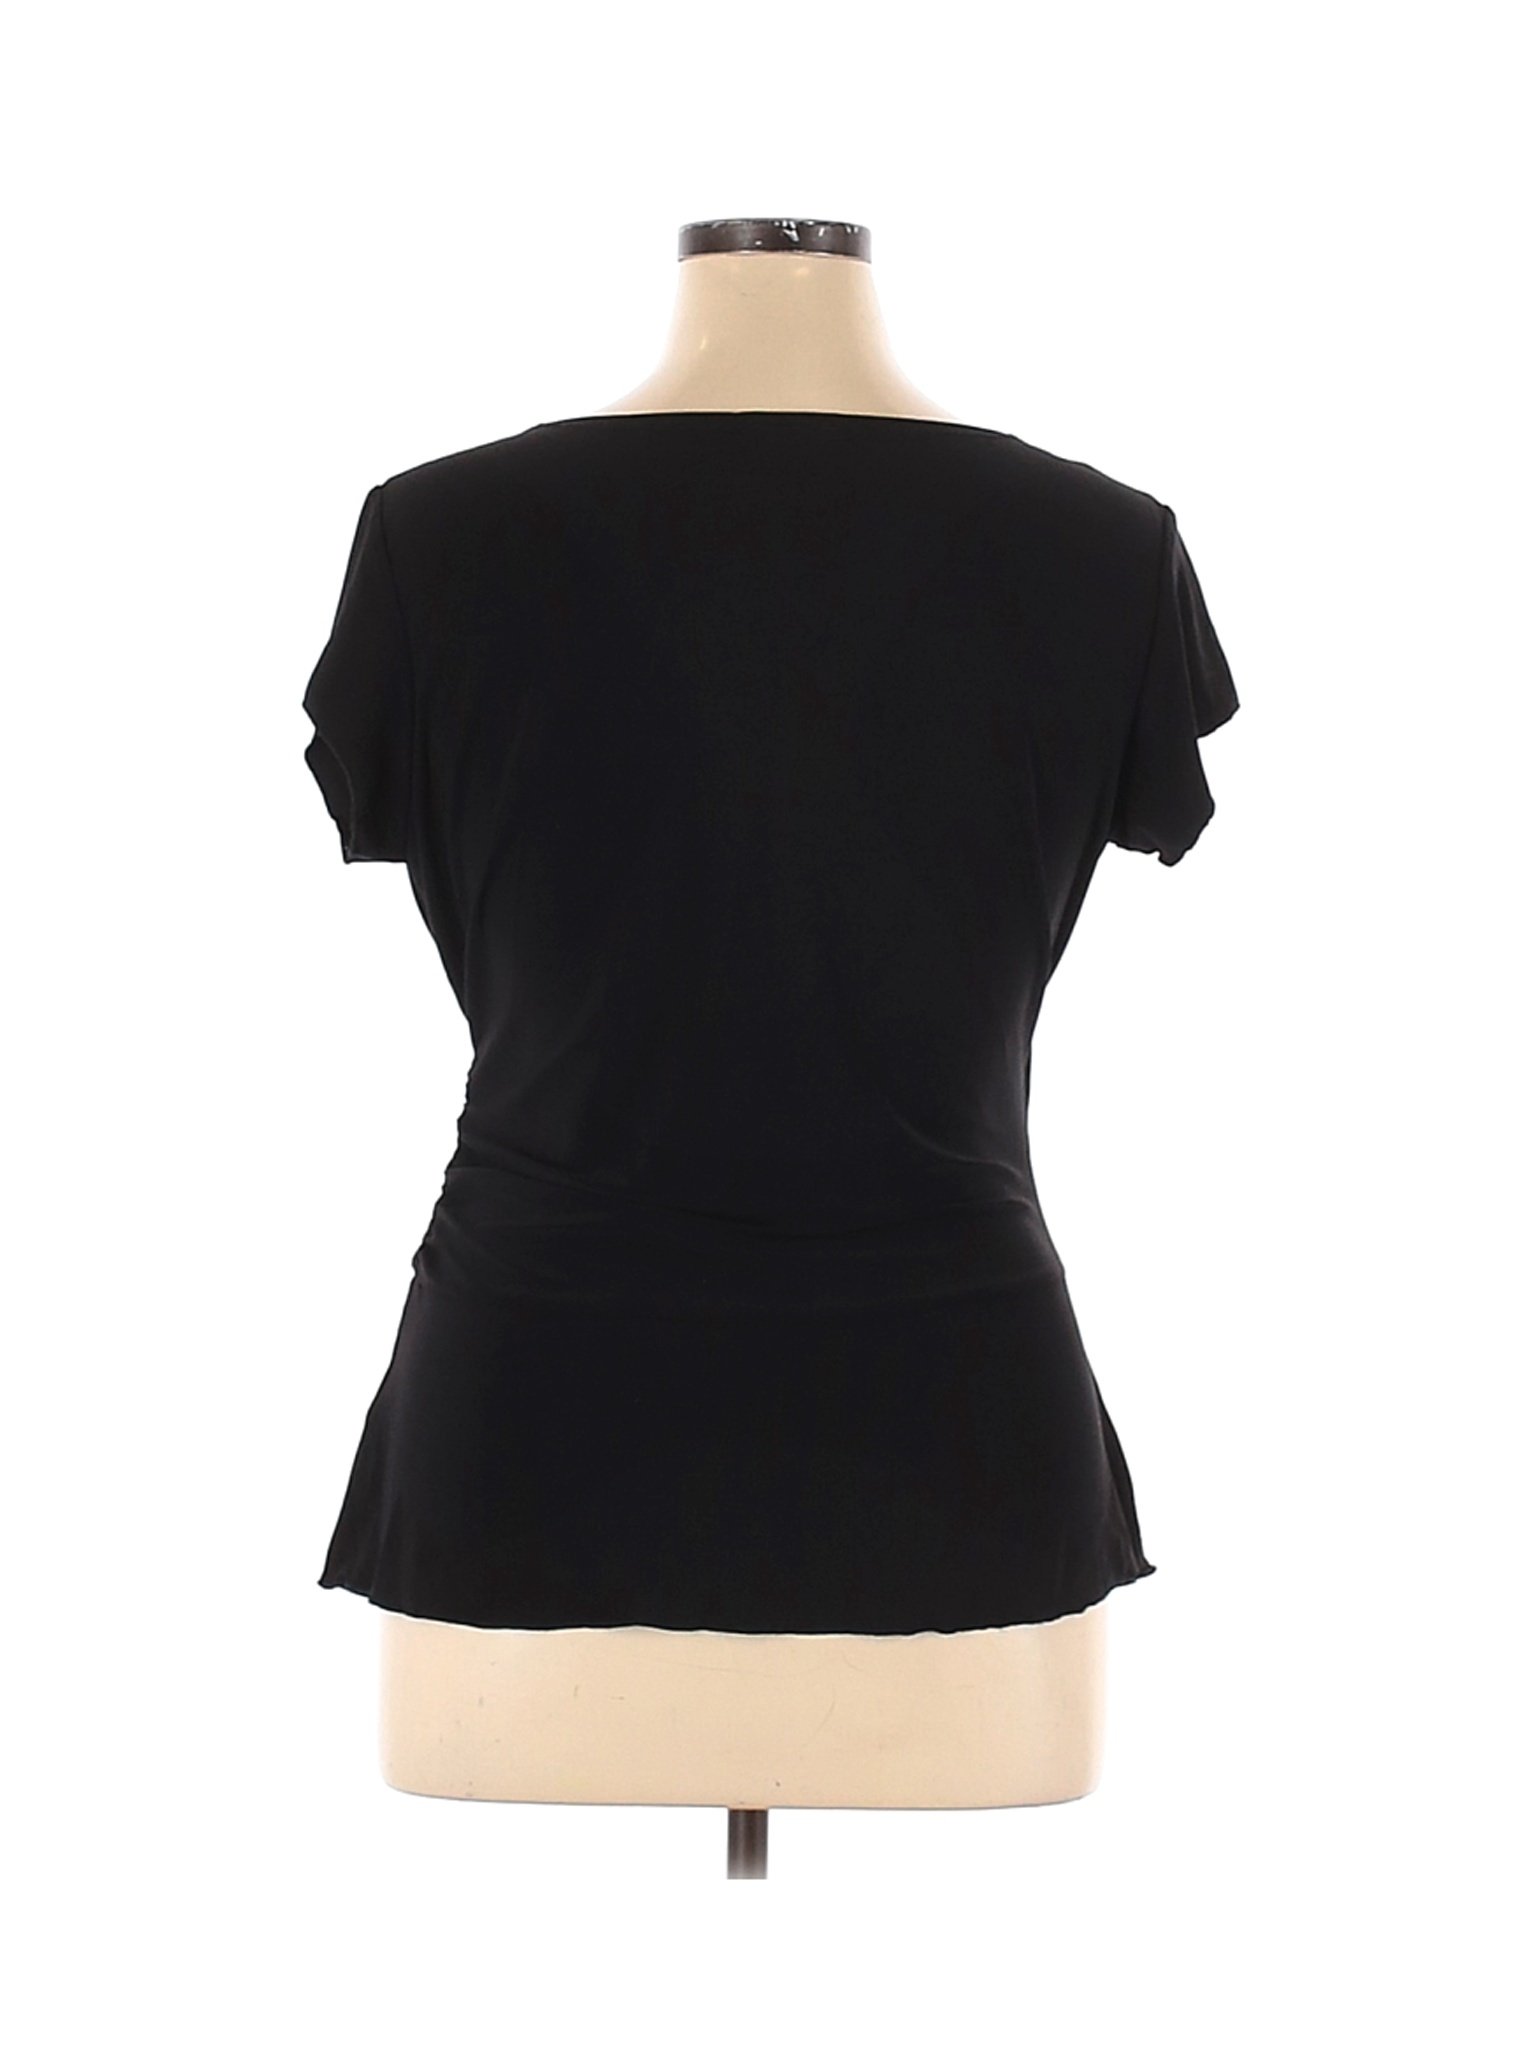 Roz & Ali Women Black Short Sleeve Blouse XL | eBay